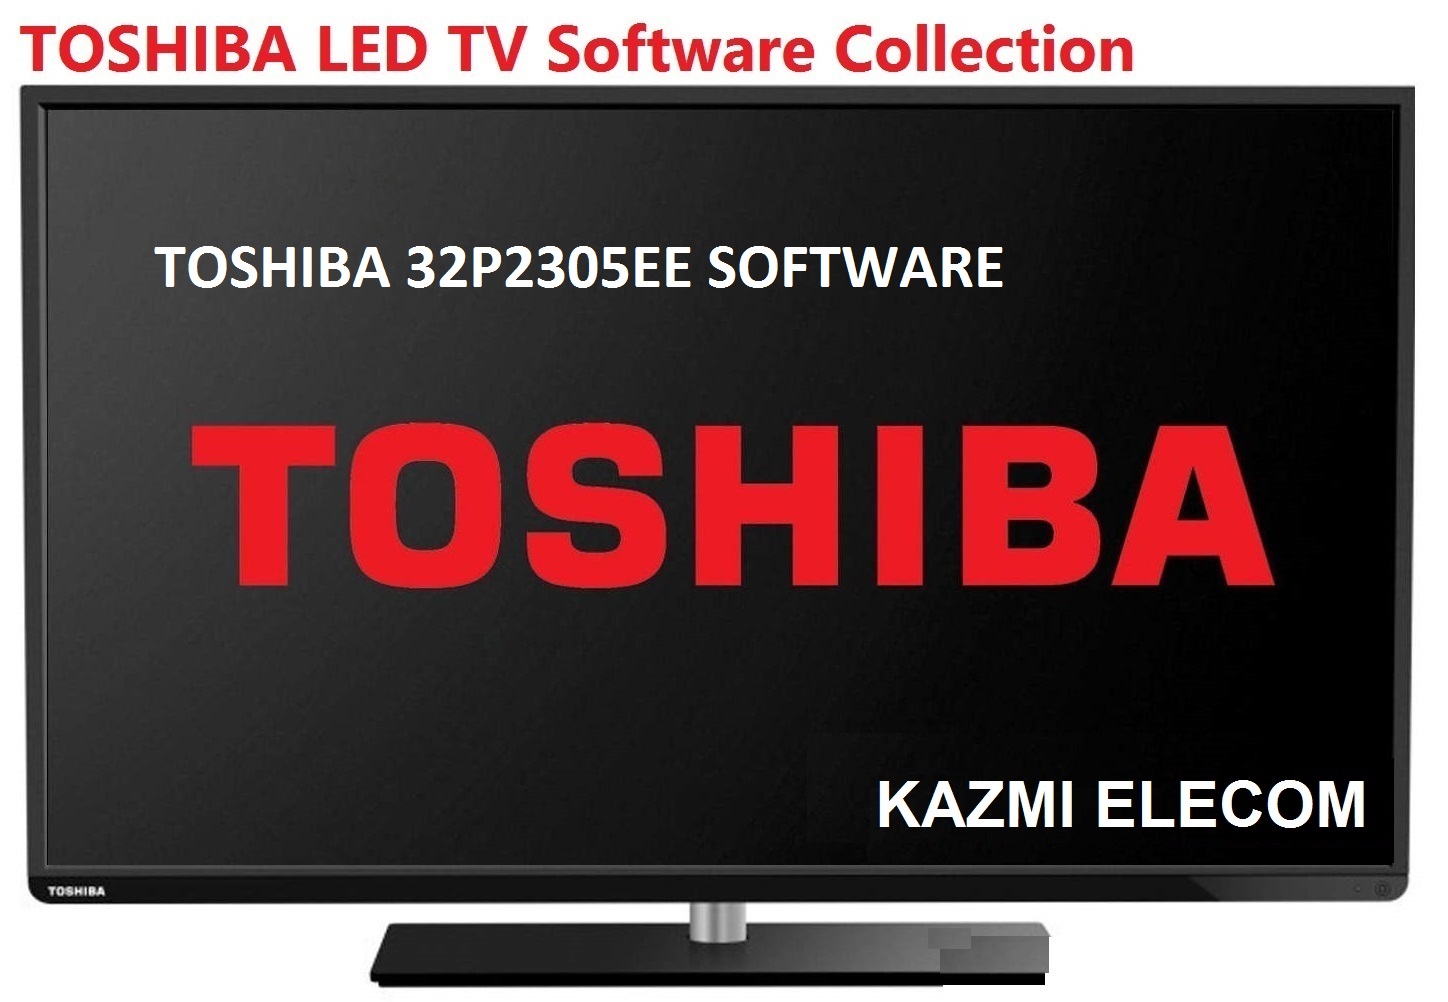 Toshiba 32P2305Ee